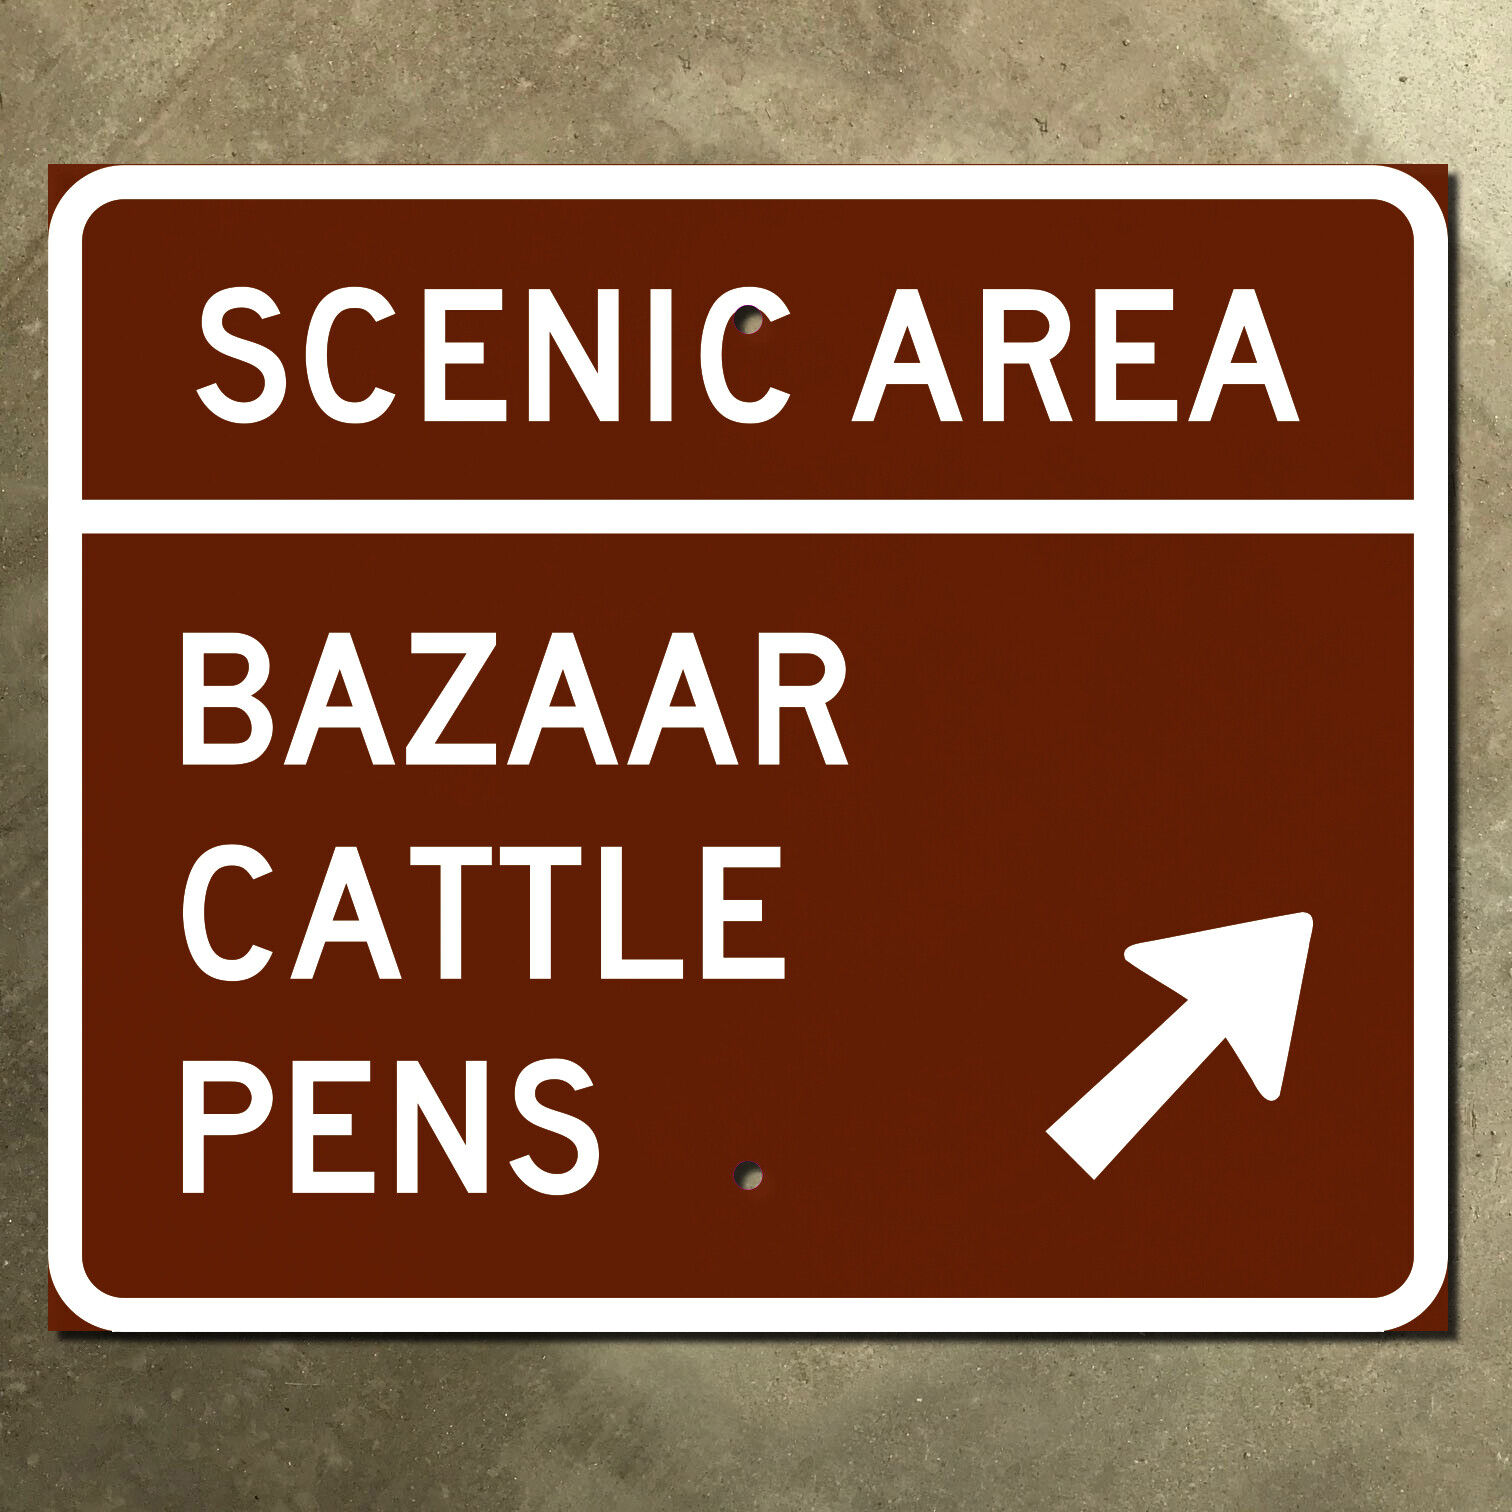 Kansas Bazaar Cattle Pens highway marker road guide sign scenic area brown 12x10